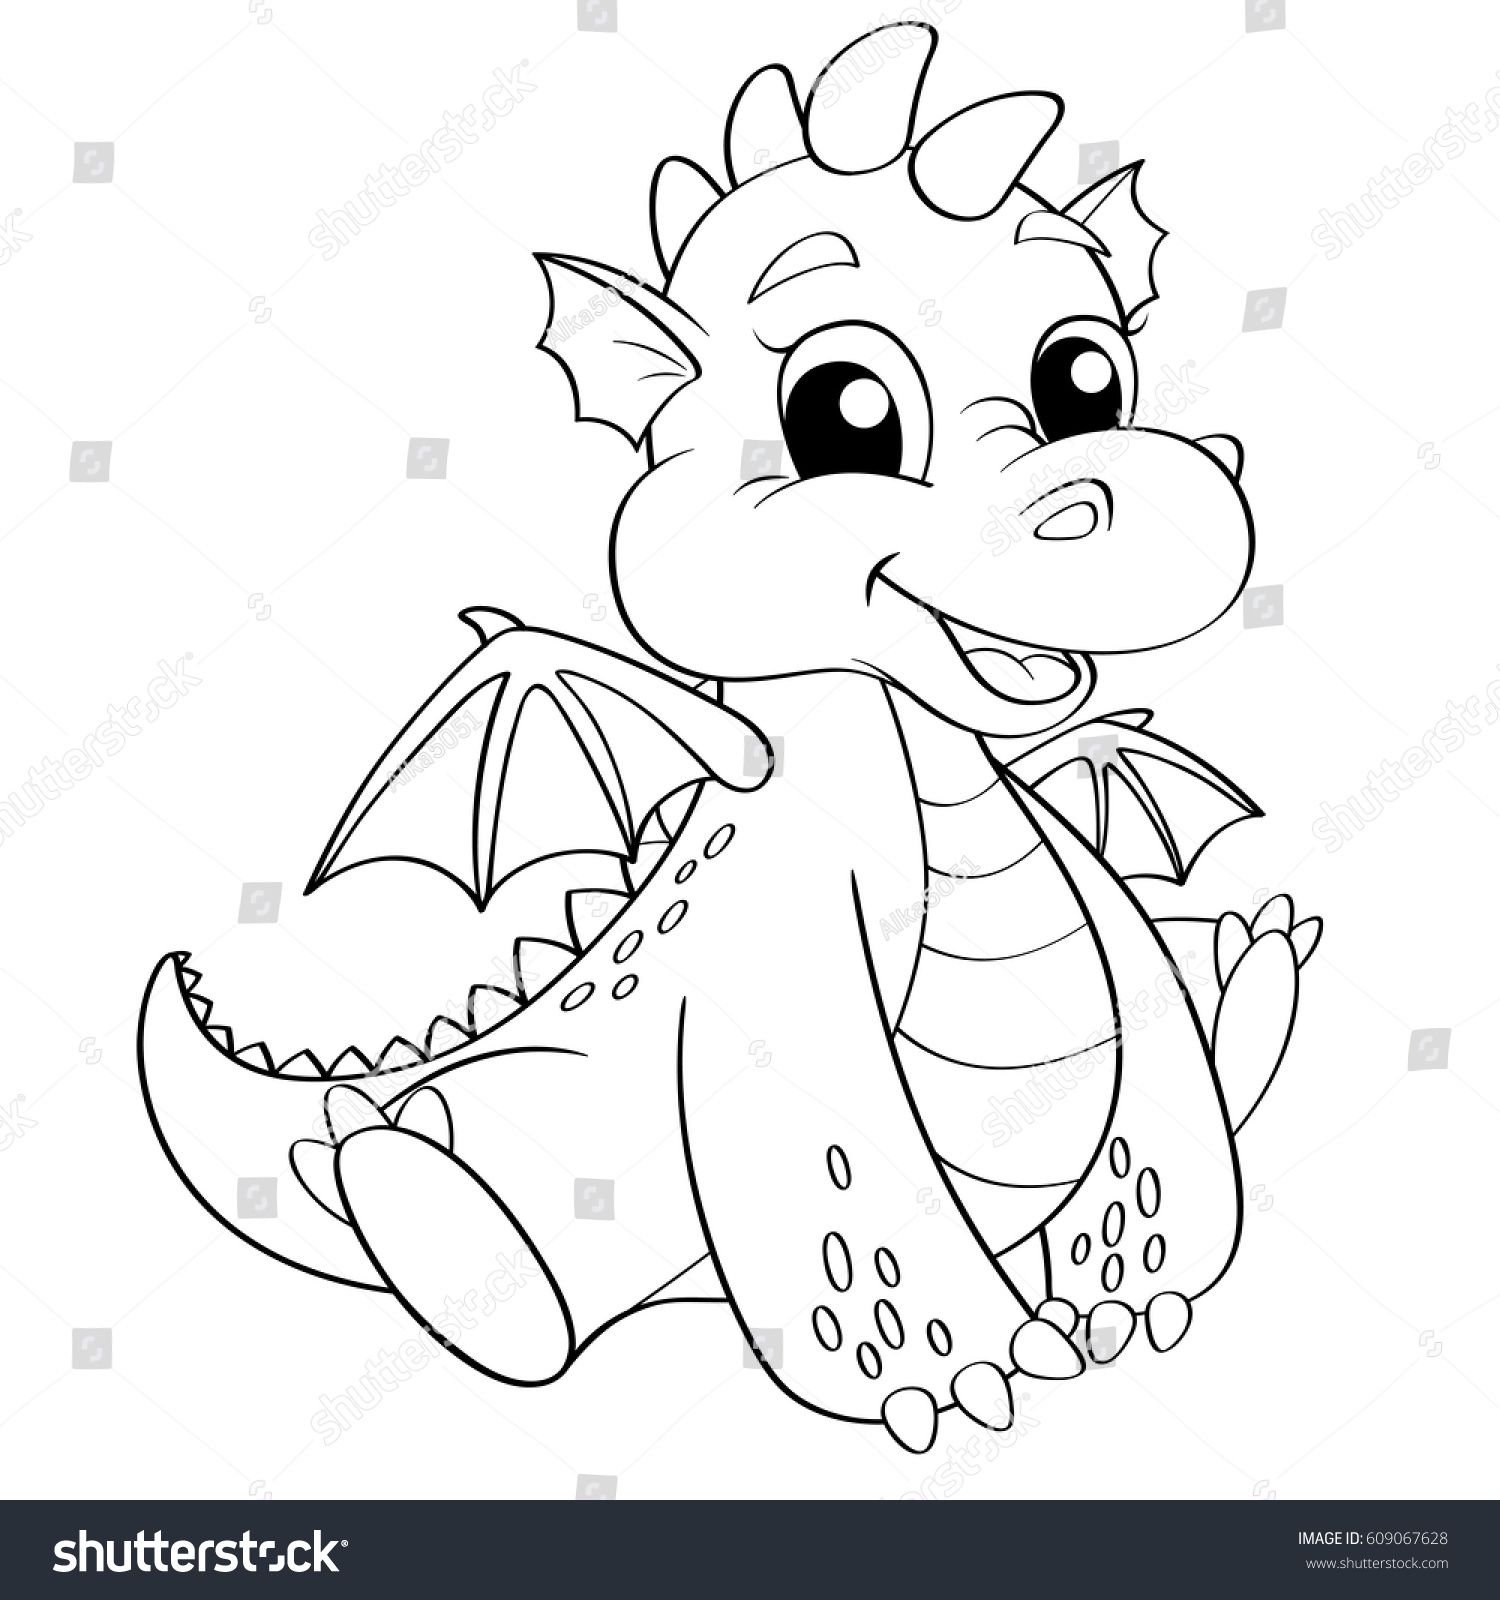 Cute cartoon dragon